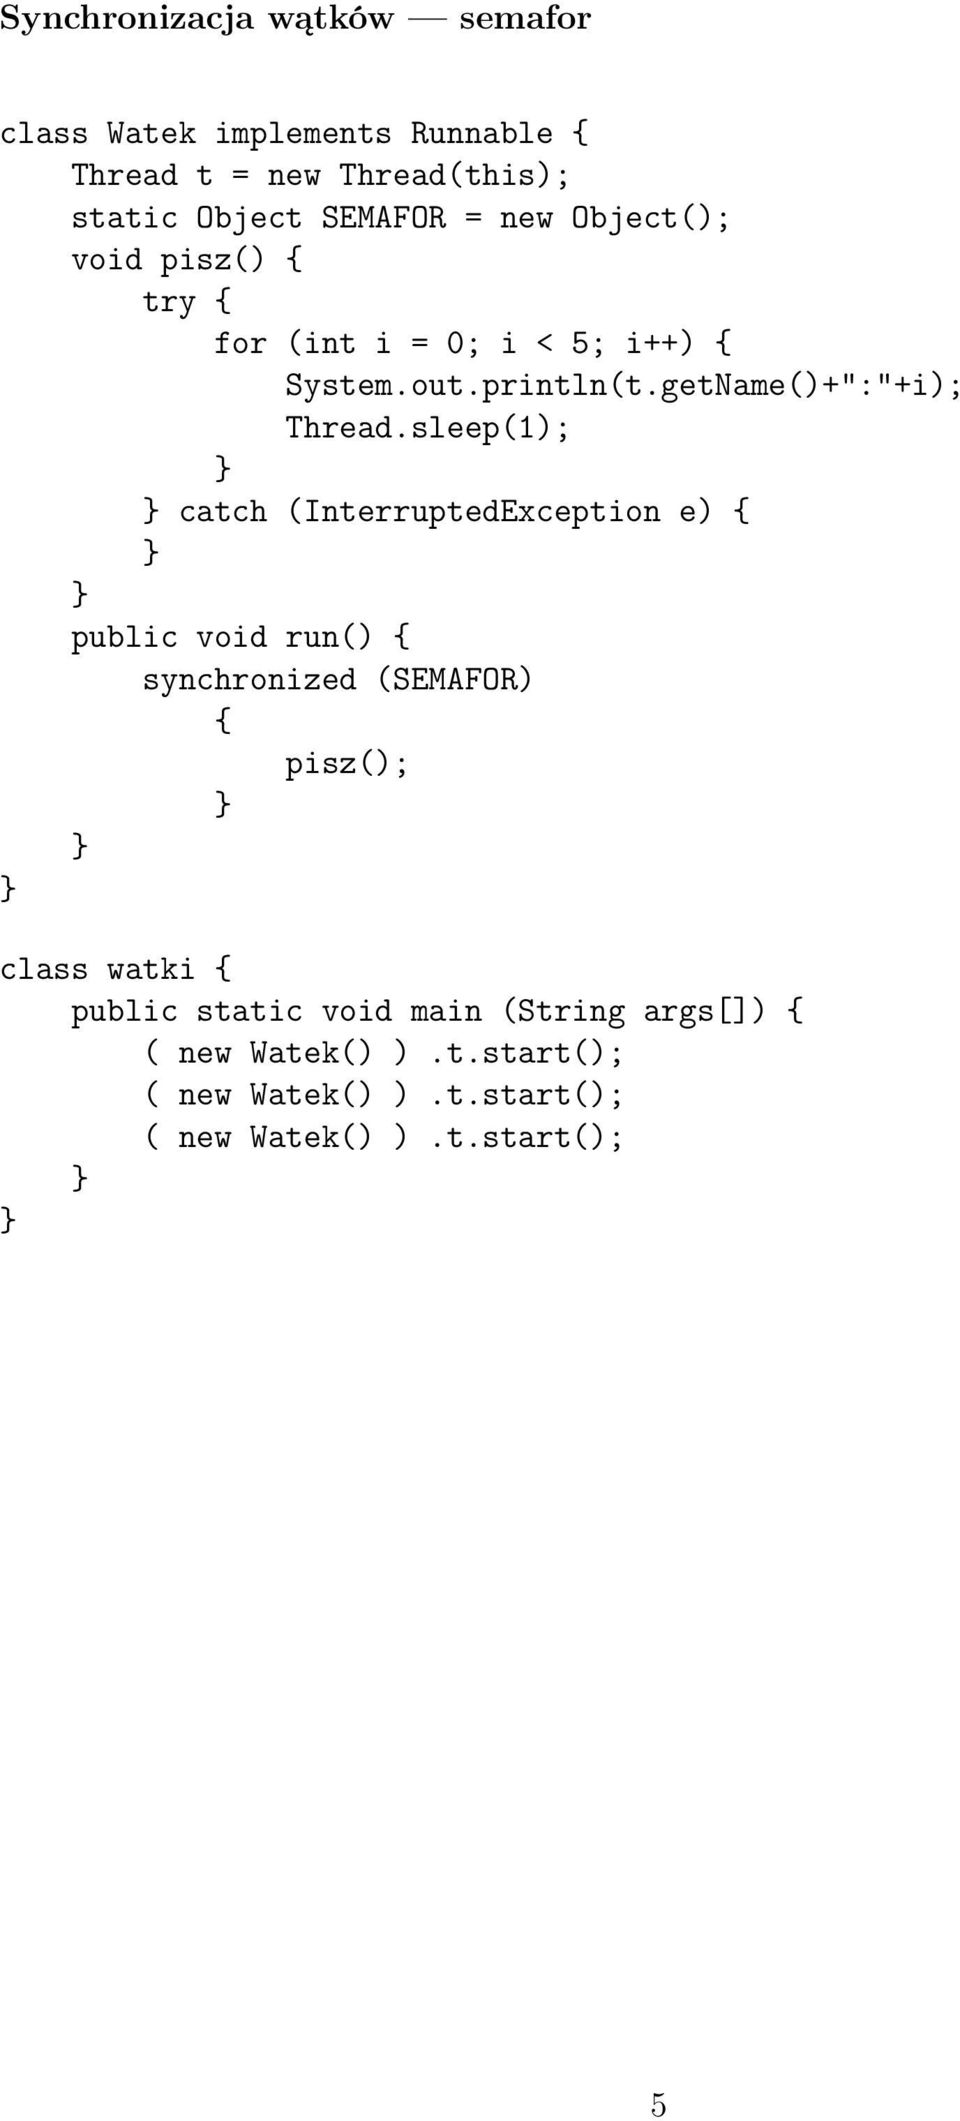 getName()+":"+i); catch (InterruptedException e) public void run() synchronized (SEMAFOR) pisz(); class